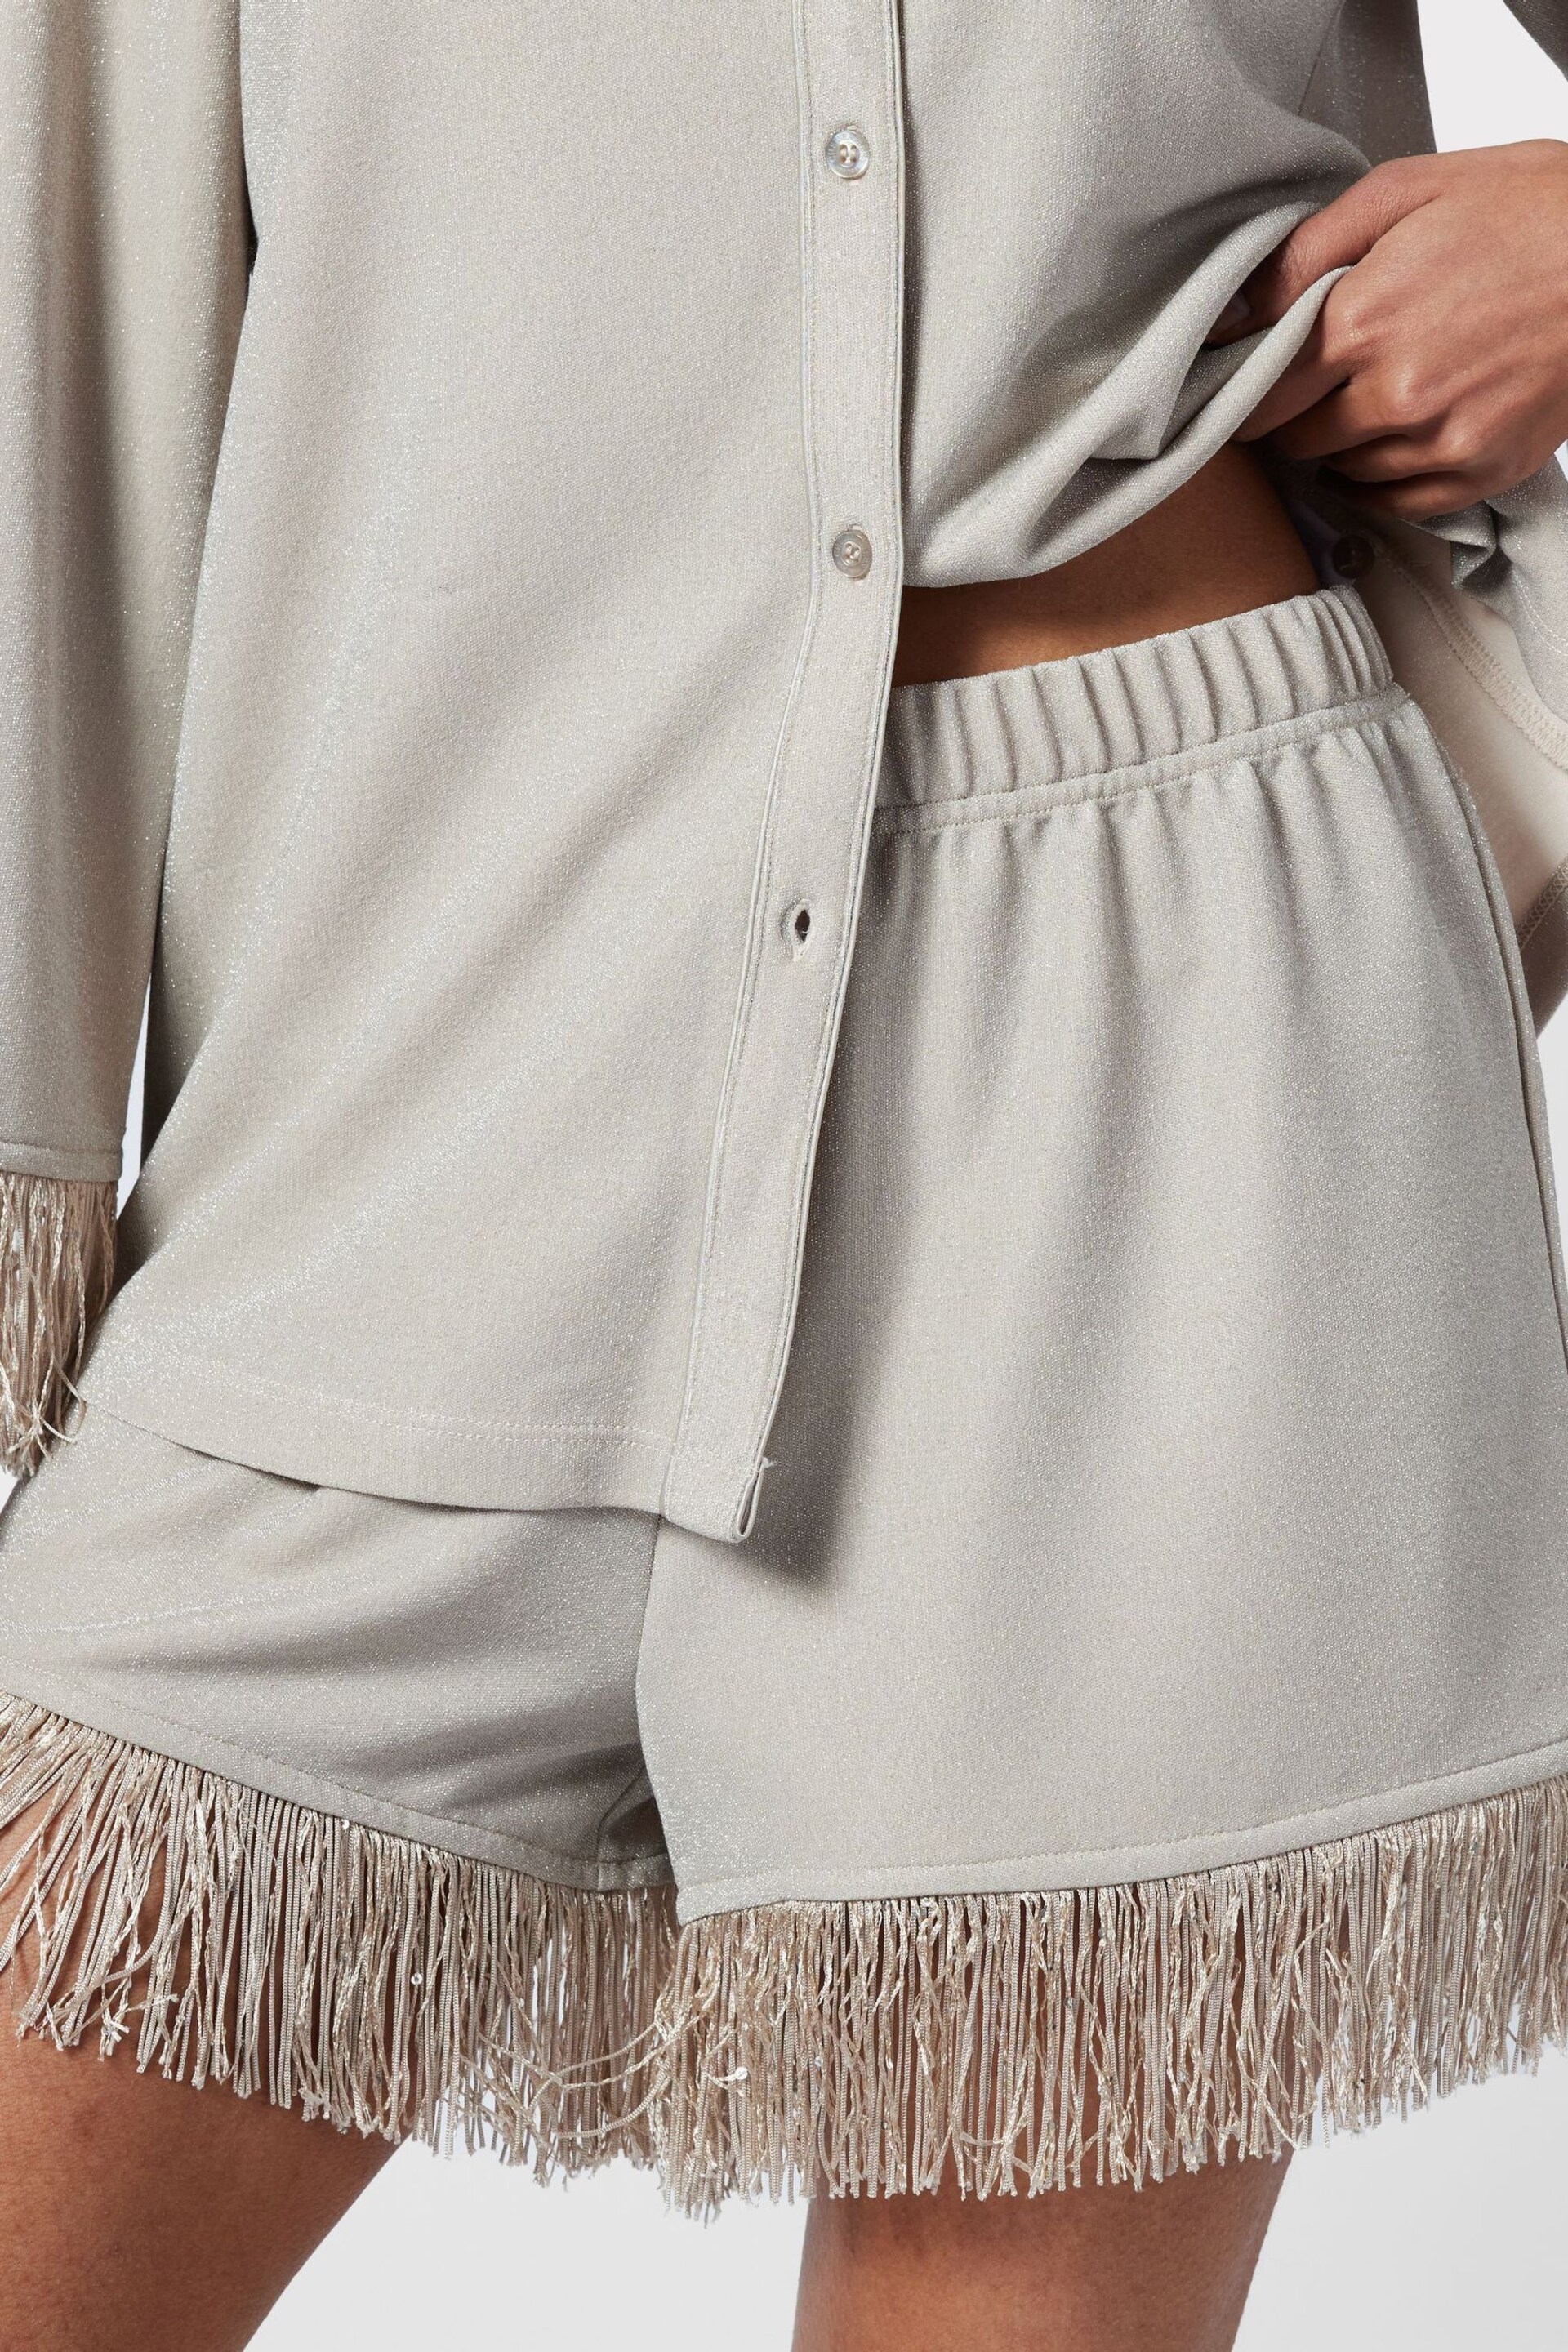 Chelsea Peers Grey Sparkle Fringe-Trim Short Pyjama Set - Image 5 of 5